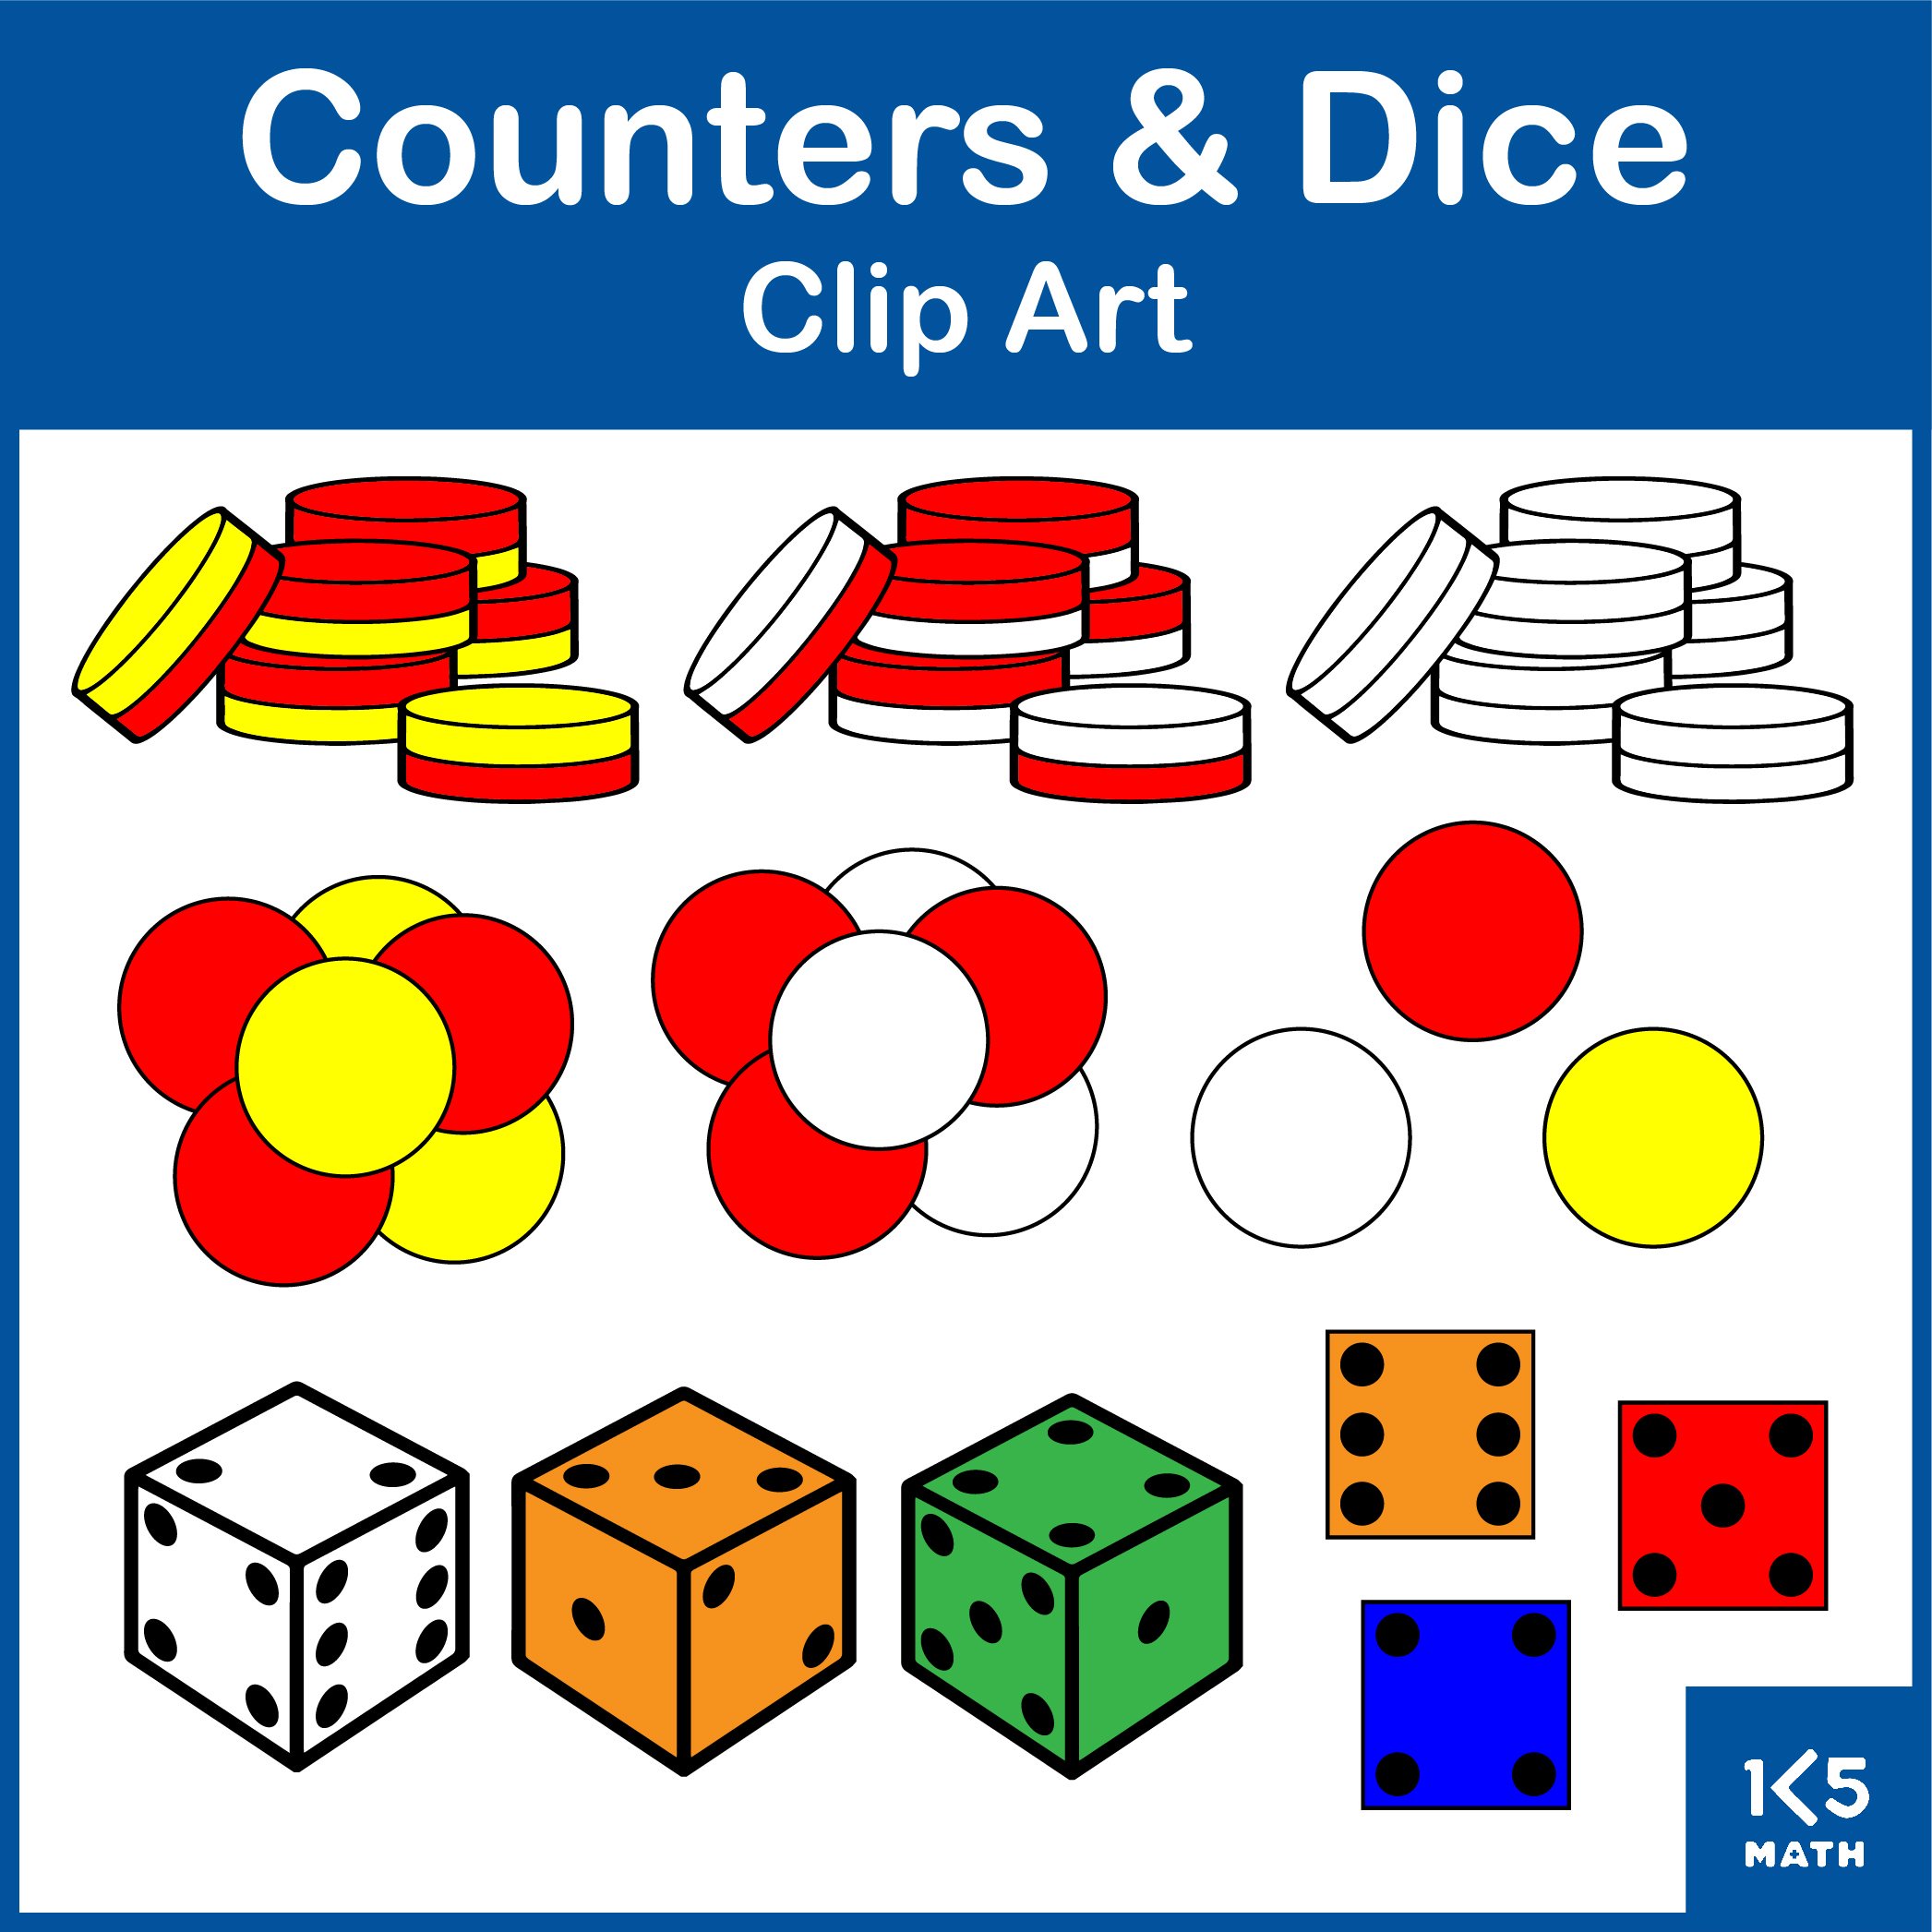 Counters & Dice Clip Art set